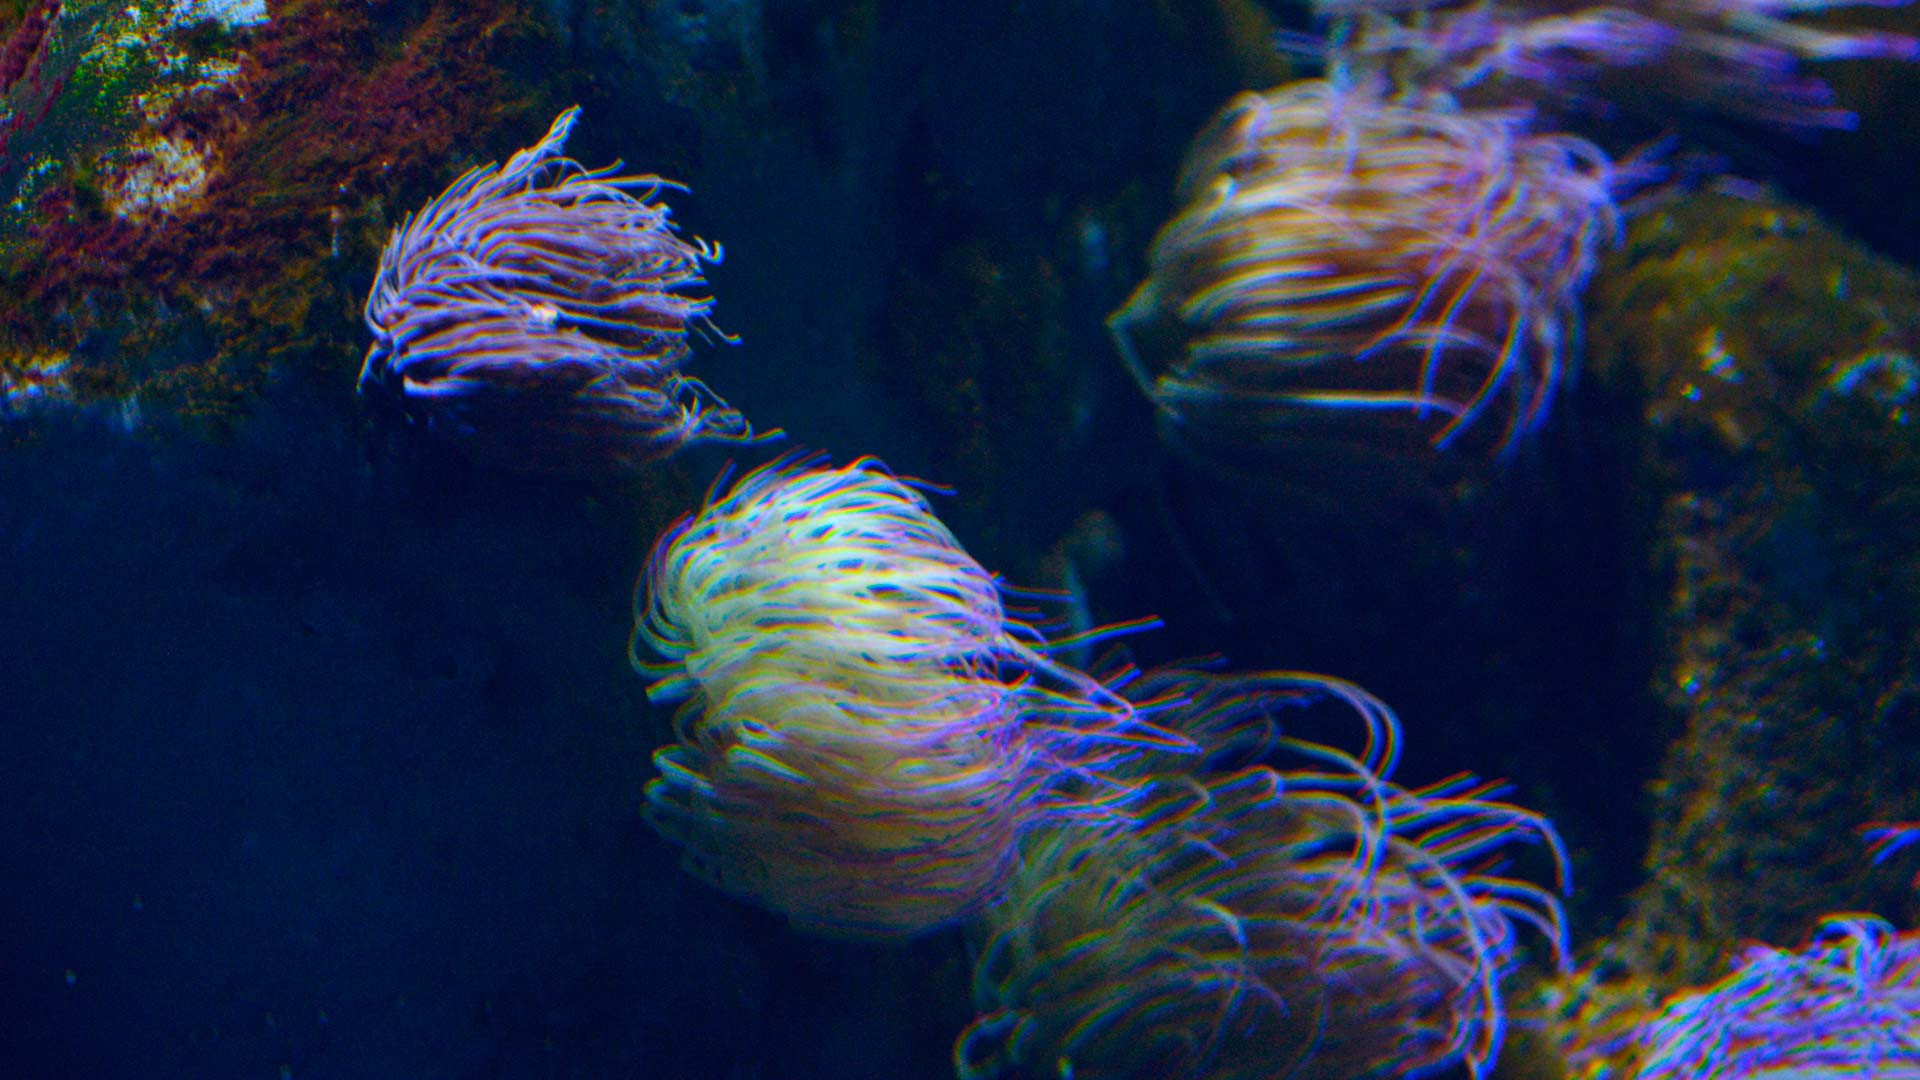 Snakelocks sea anemone